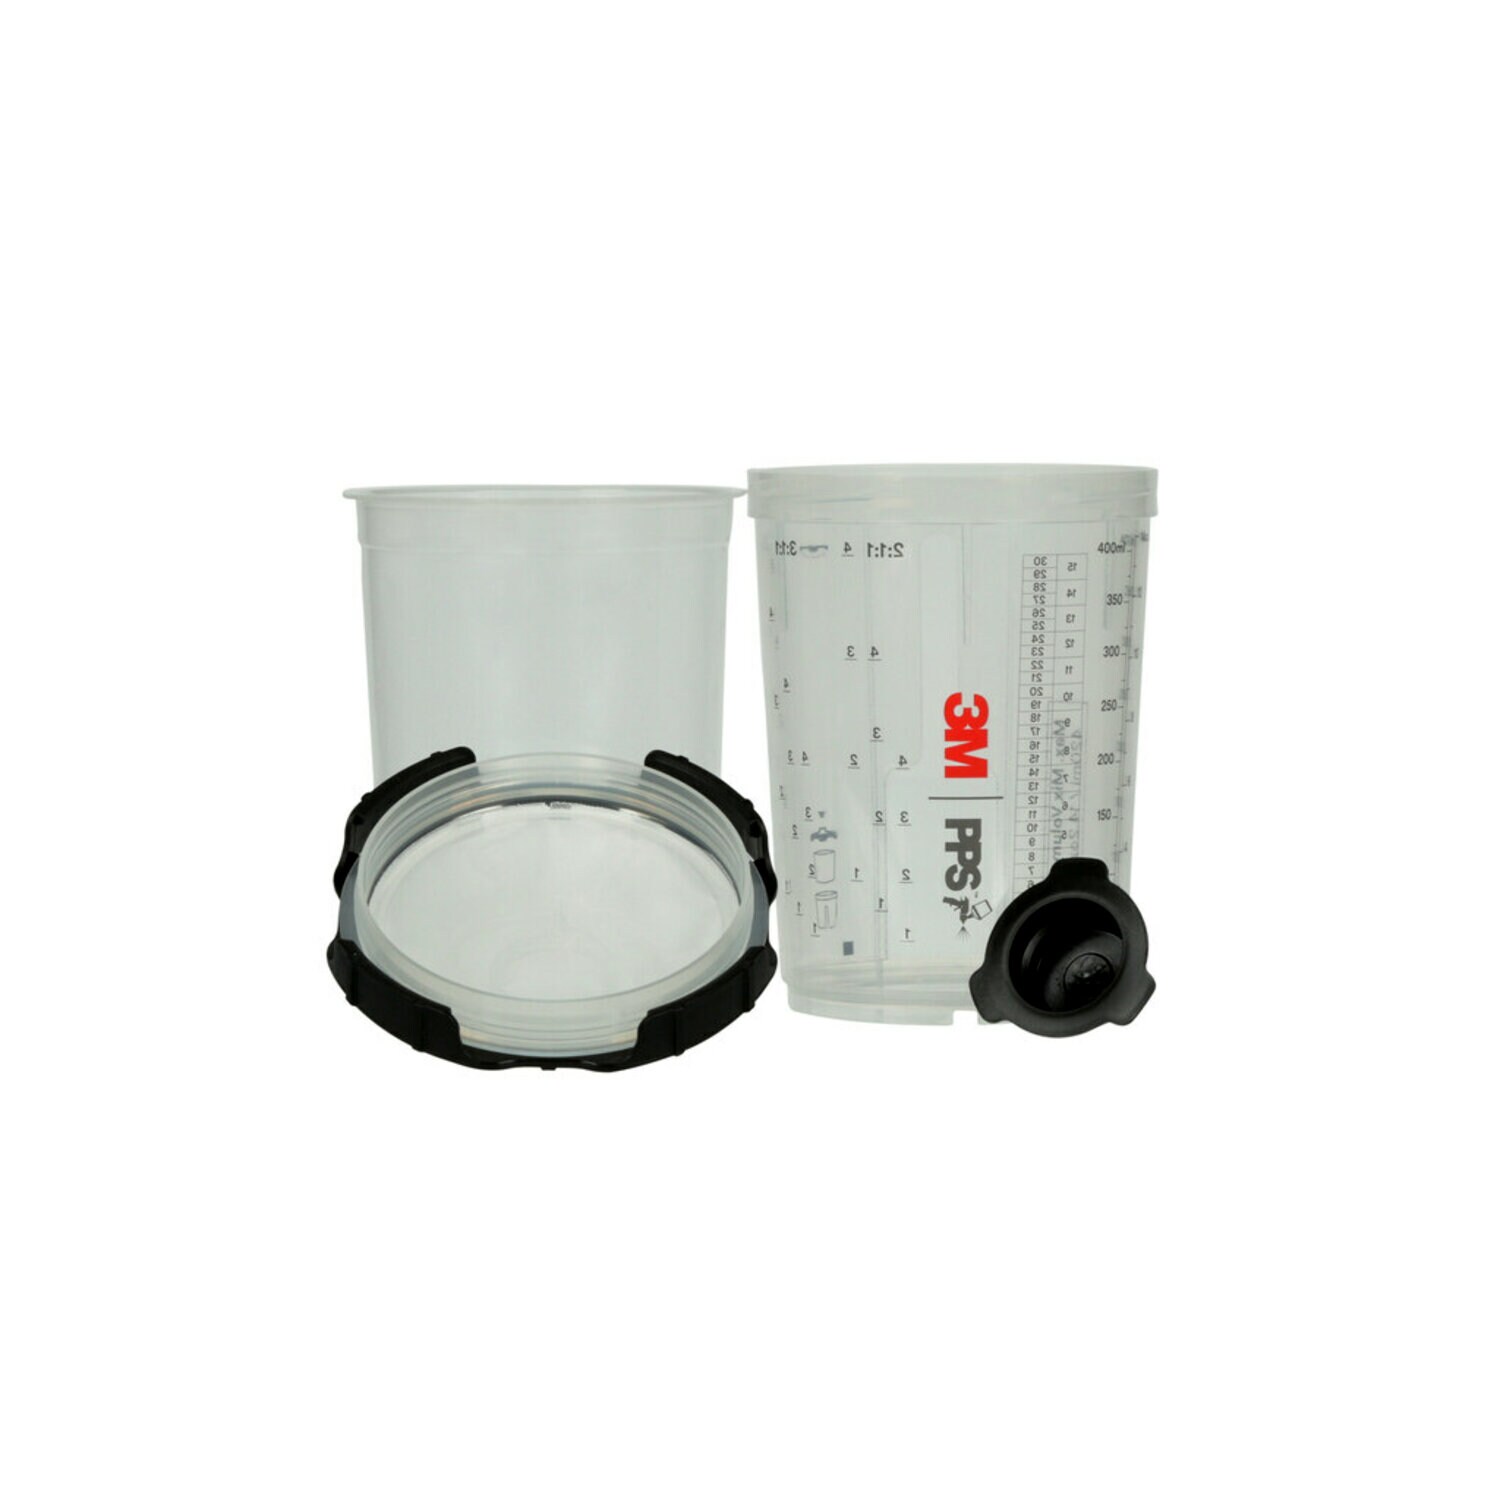 7100284554 - 3M PPS Series 2.0 Spray Cup System Kit 26112, Midi (13.5 fl oz, 400 mL), 200 Micron Filters, 1 Kit/Case